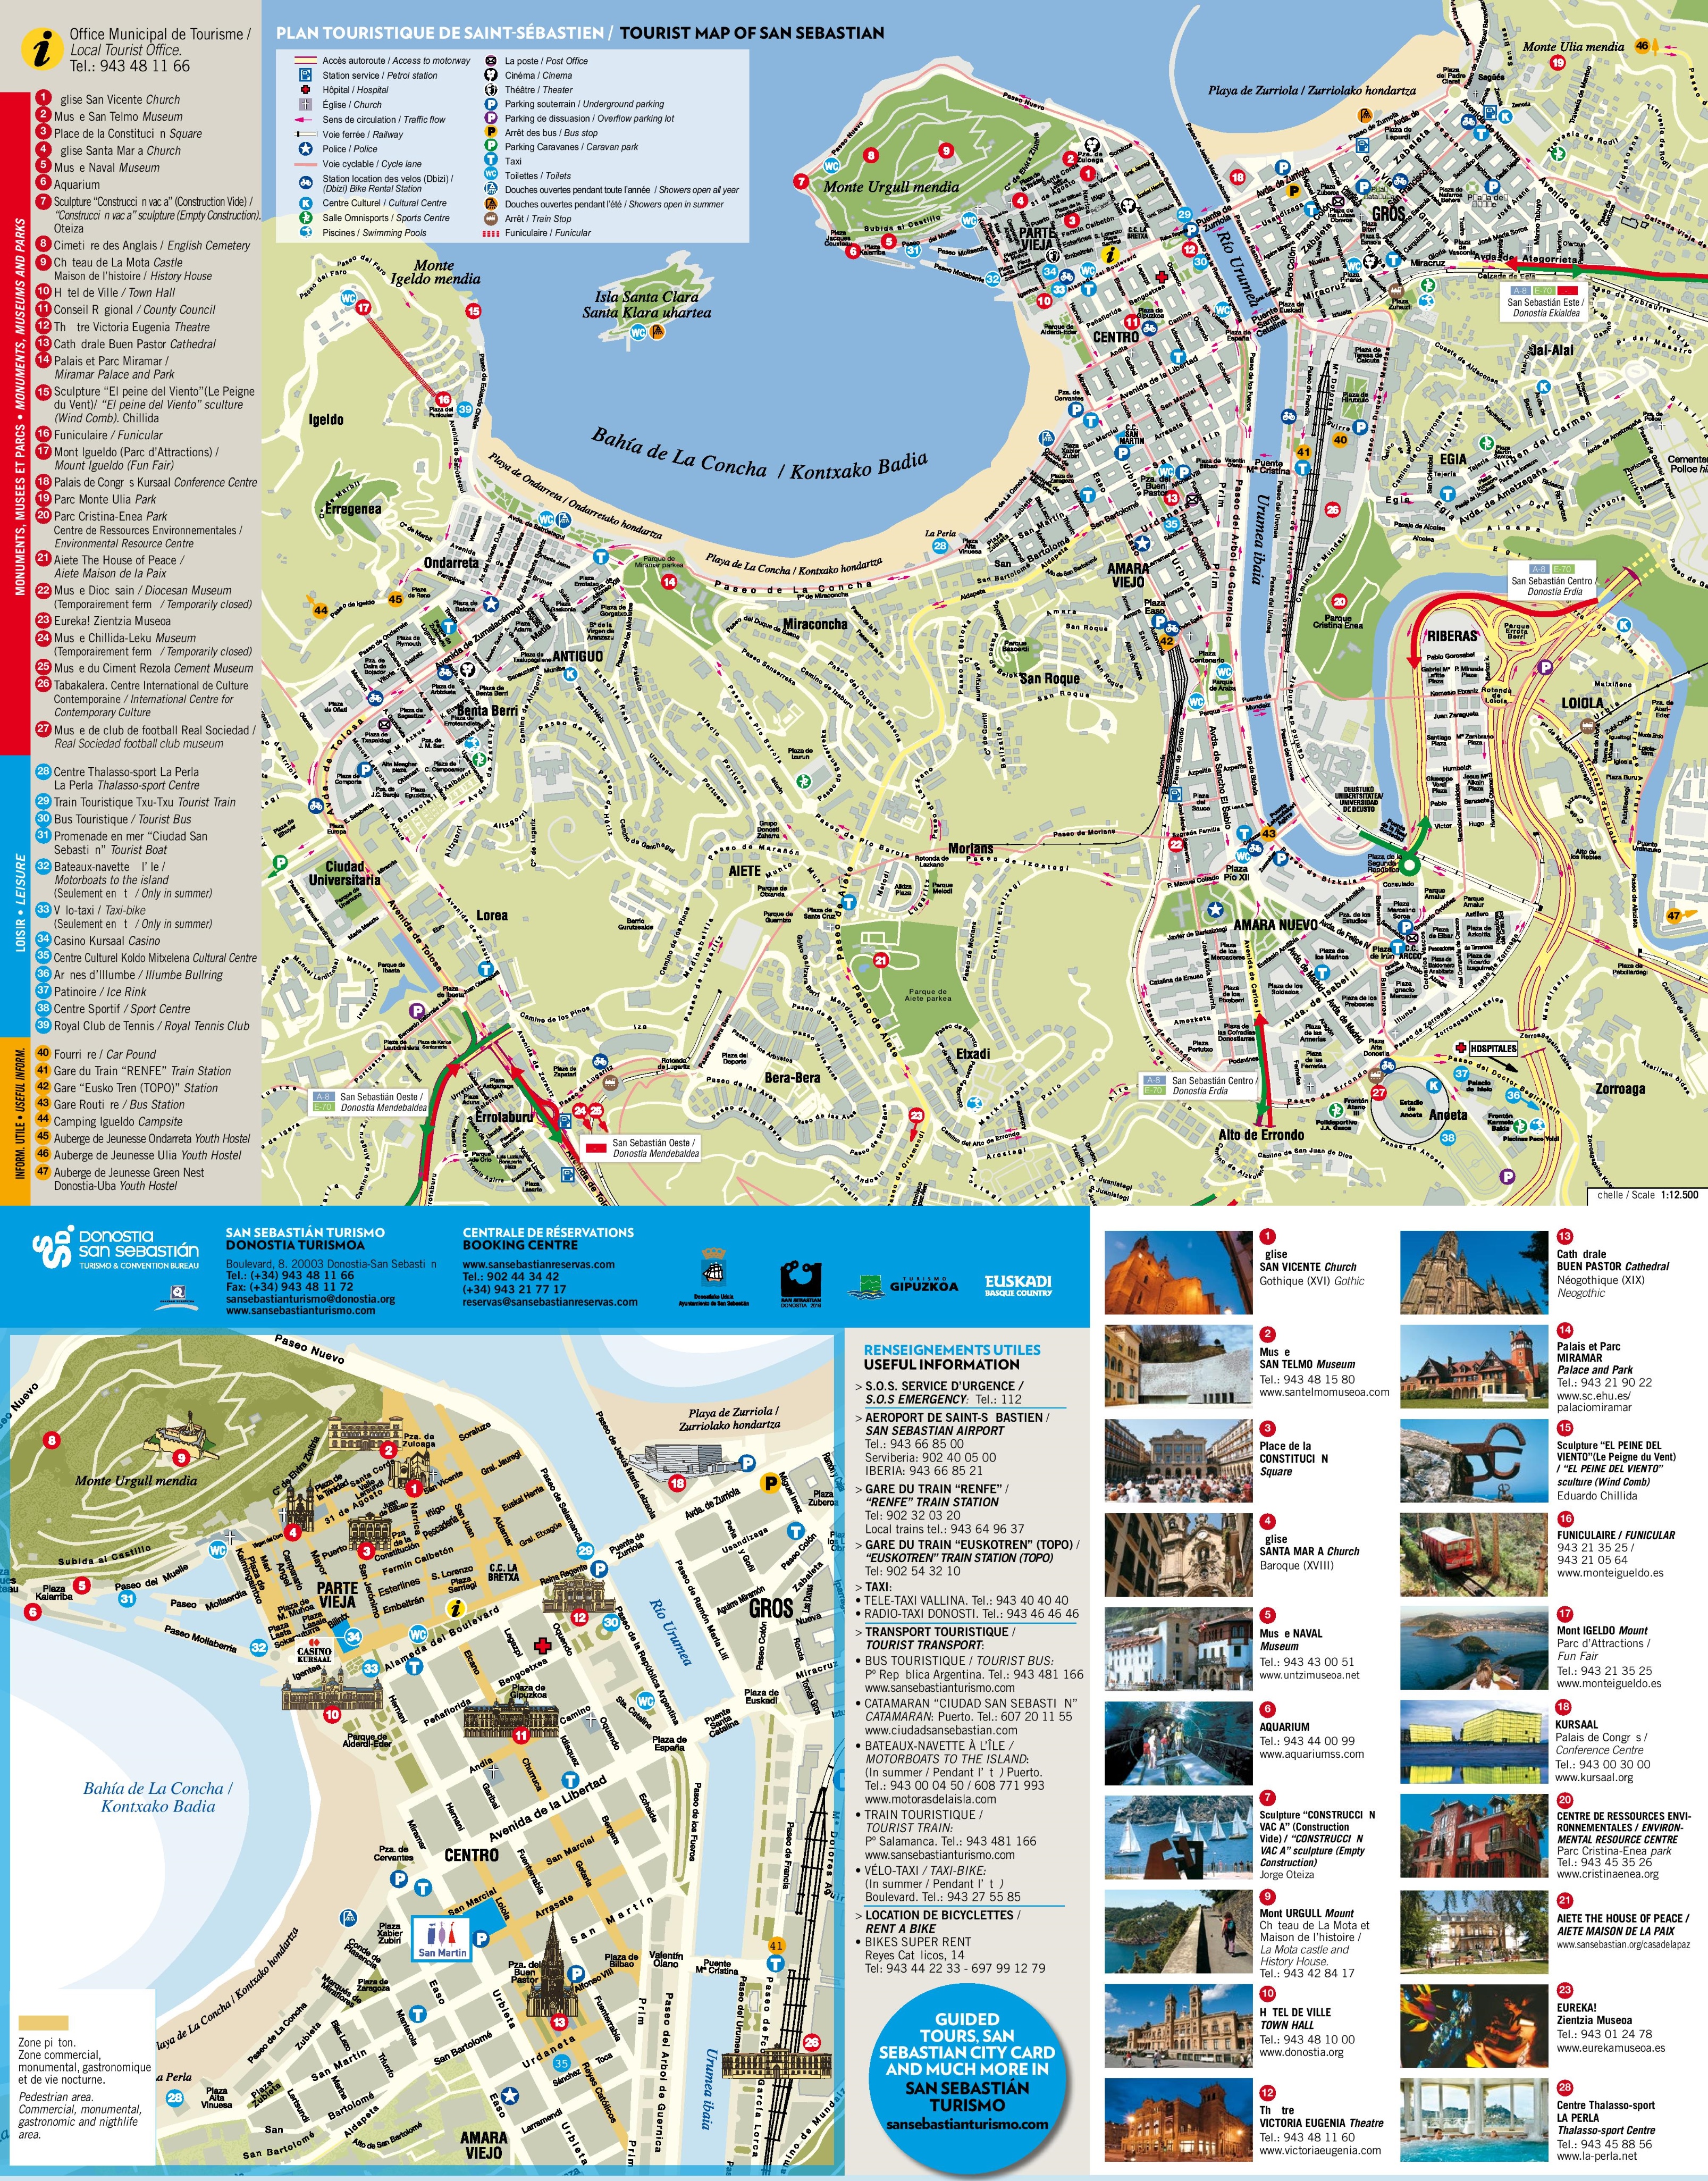 San Sebastián tourist attractions map3213 x 4102